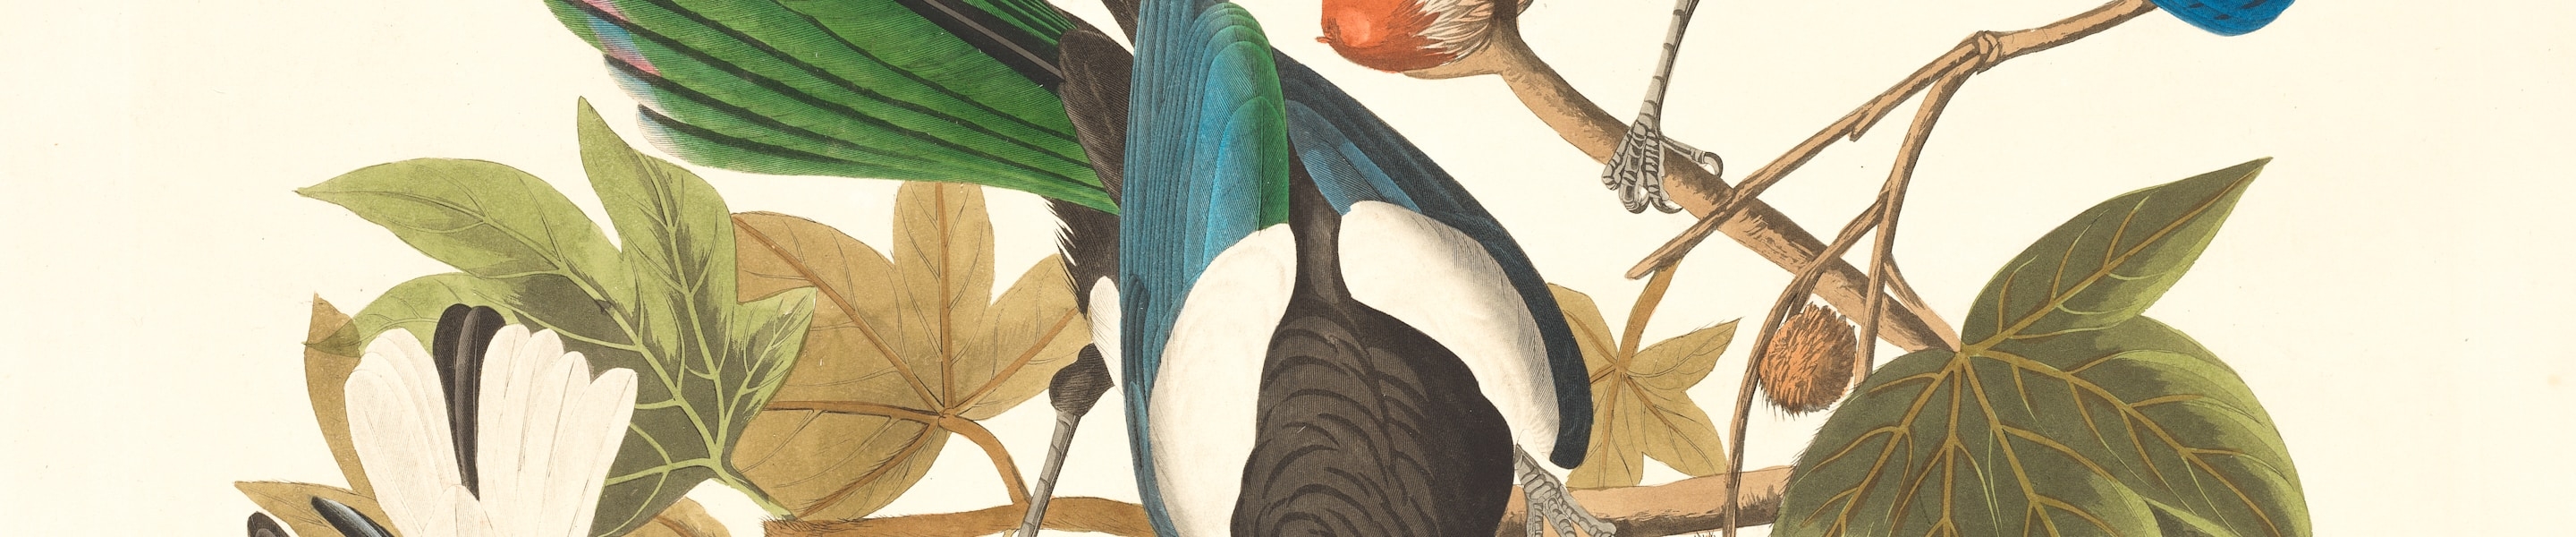 Yellow-billed magpie, Stellers jay, Ultramarine jay and Clark's crow. Artist: Audubon, John James, 1785-1851